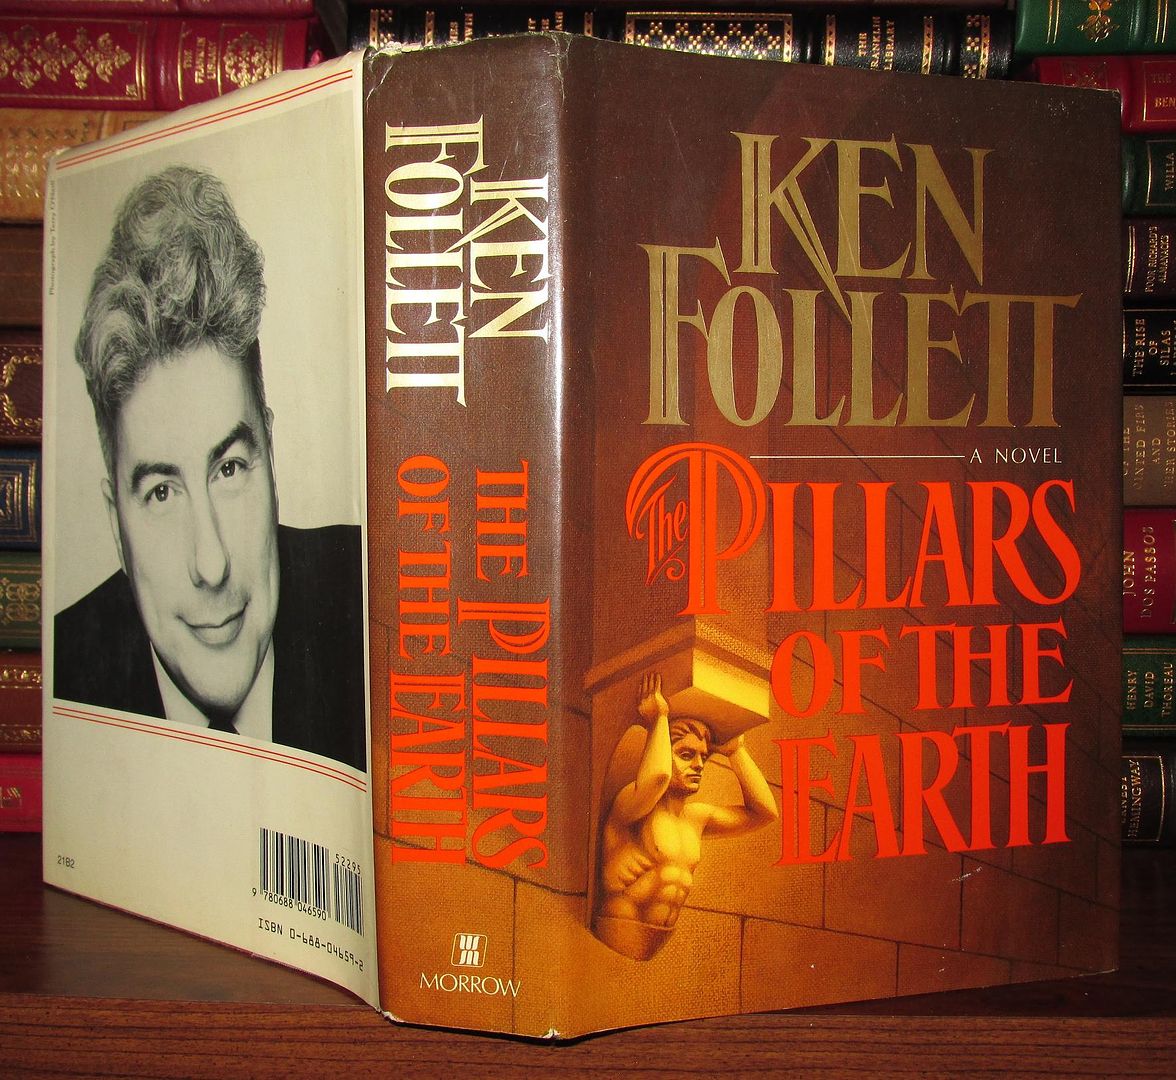 KEN FOLLETT - The Pillars of the Earth